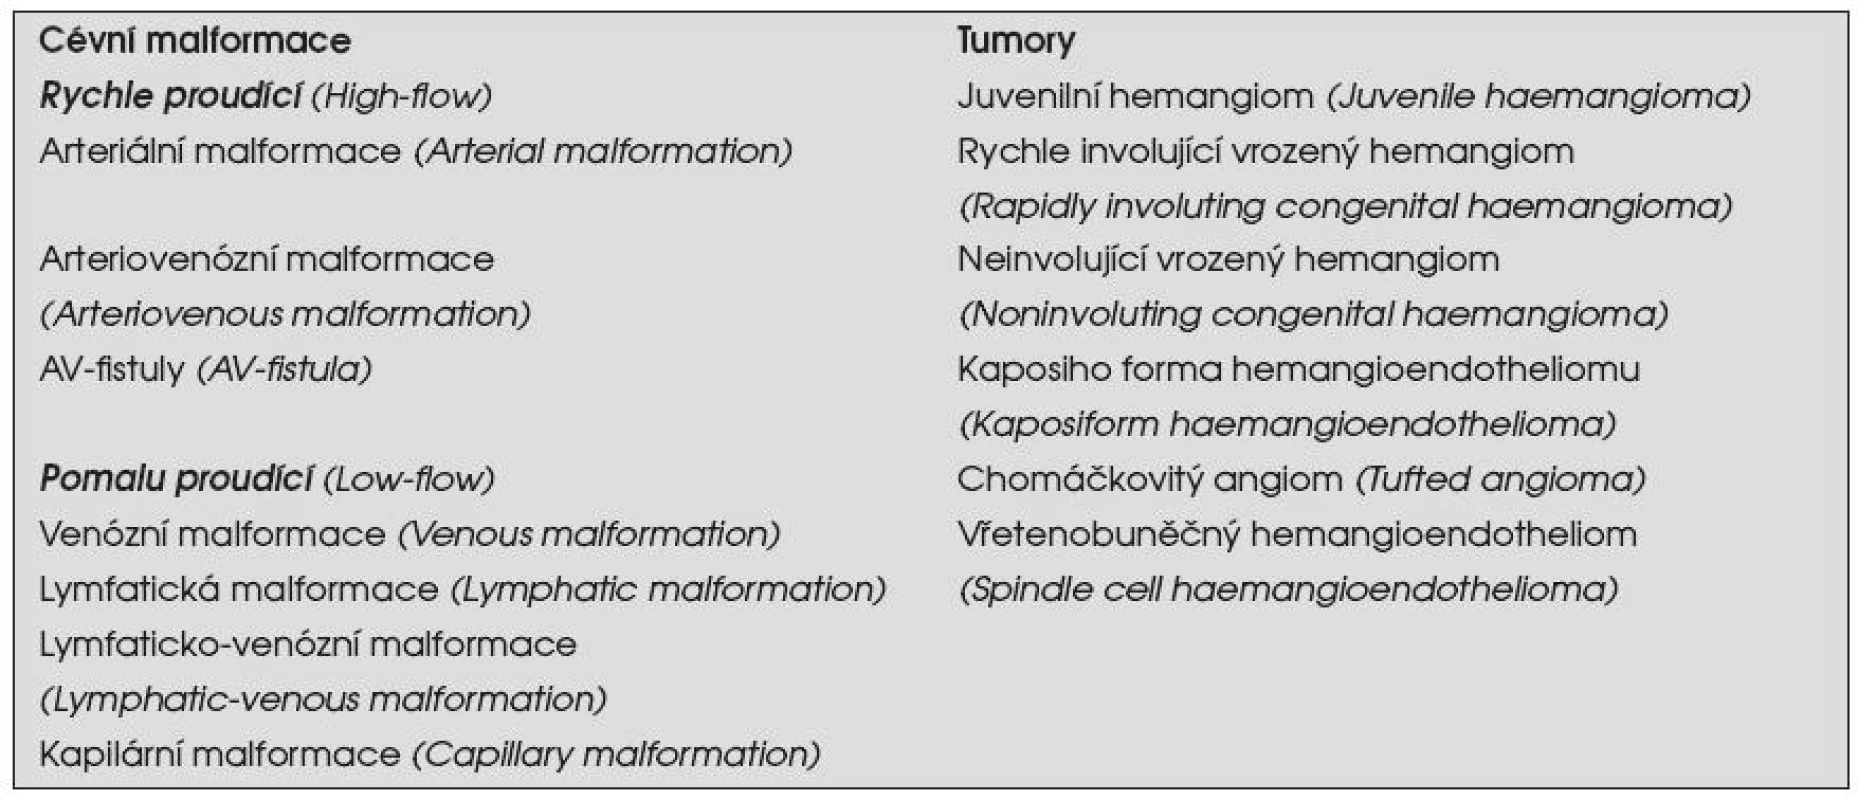 Nová klasifikace (&lt;em&gt;International Society for the Study of Vascular Anomalies&lt;/em&gt; in 1996 [5])